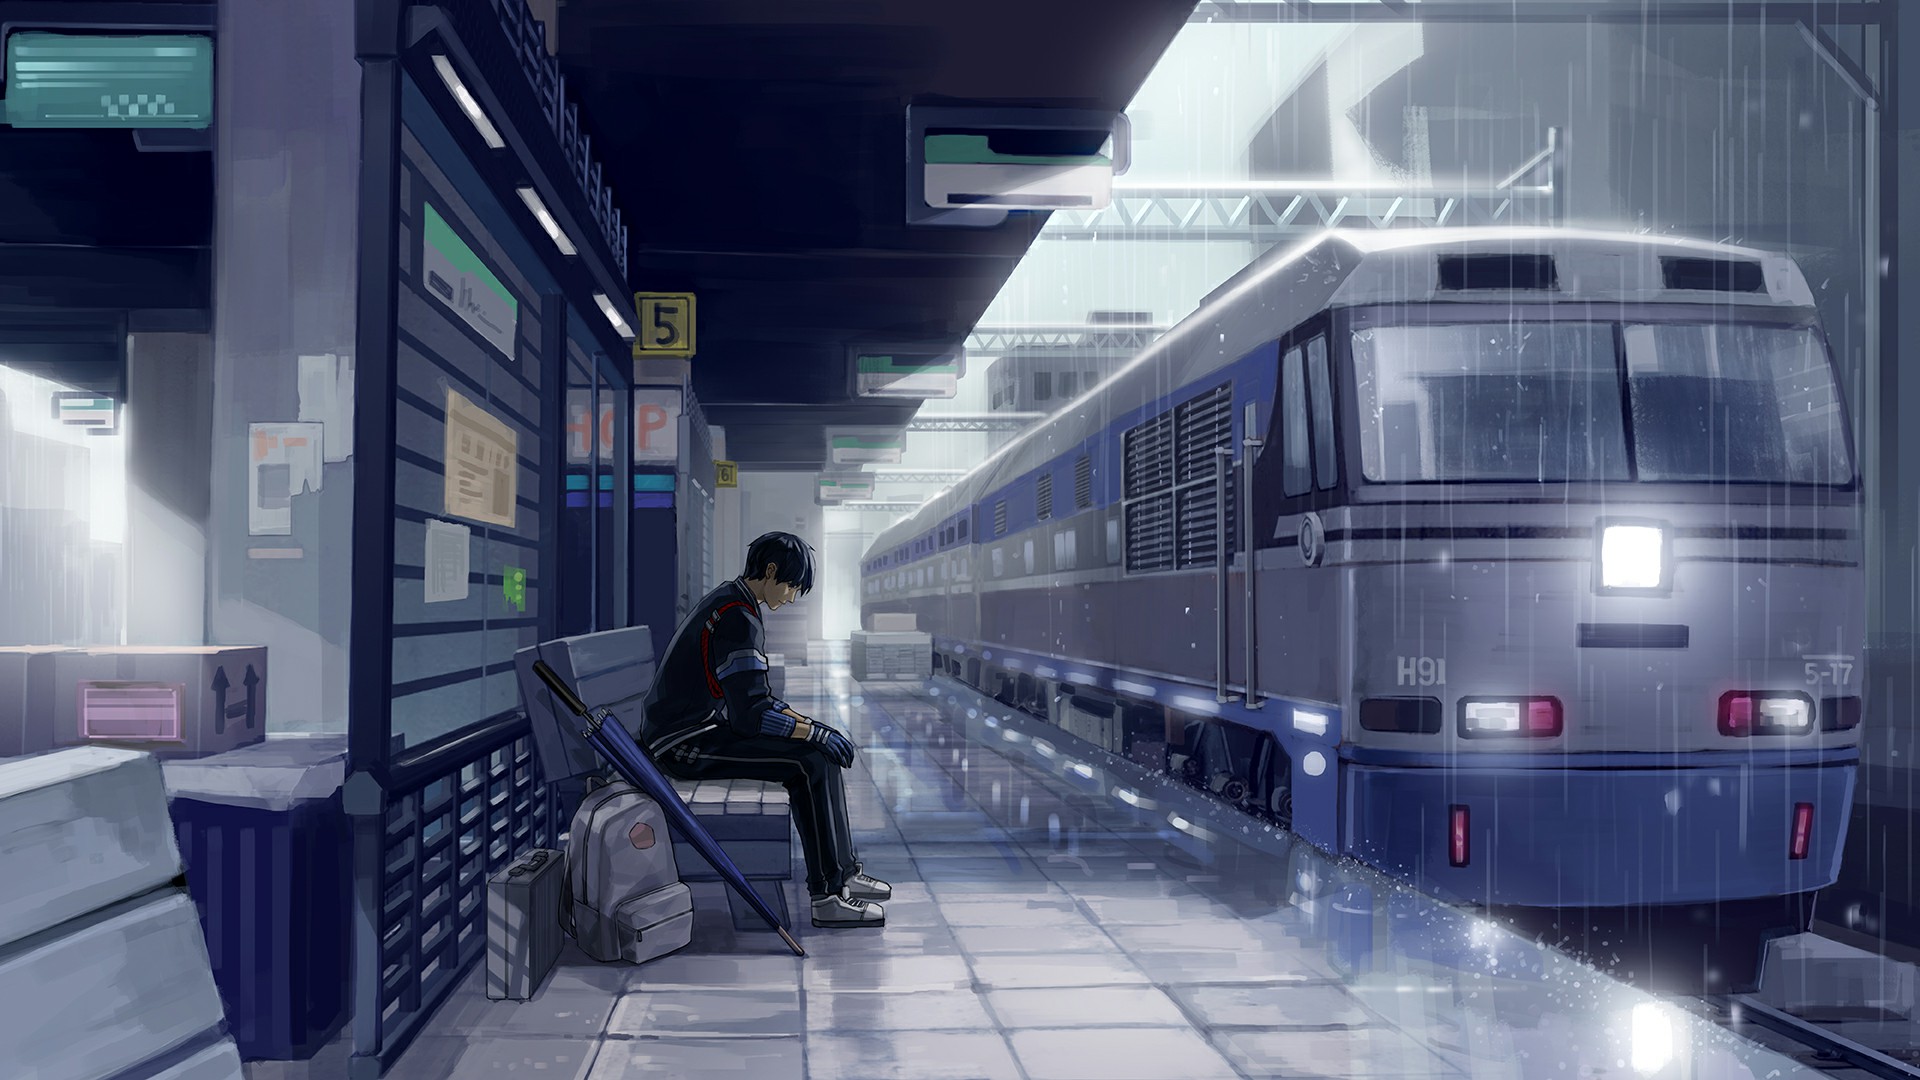 Anime 1920x1080 TROUBLESHOOTER rain train train station alone backpacks video games umbrella daylight mist bench black hair dark hair sneakers black clothing thinking